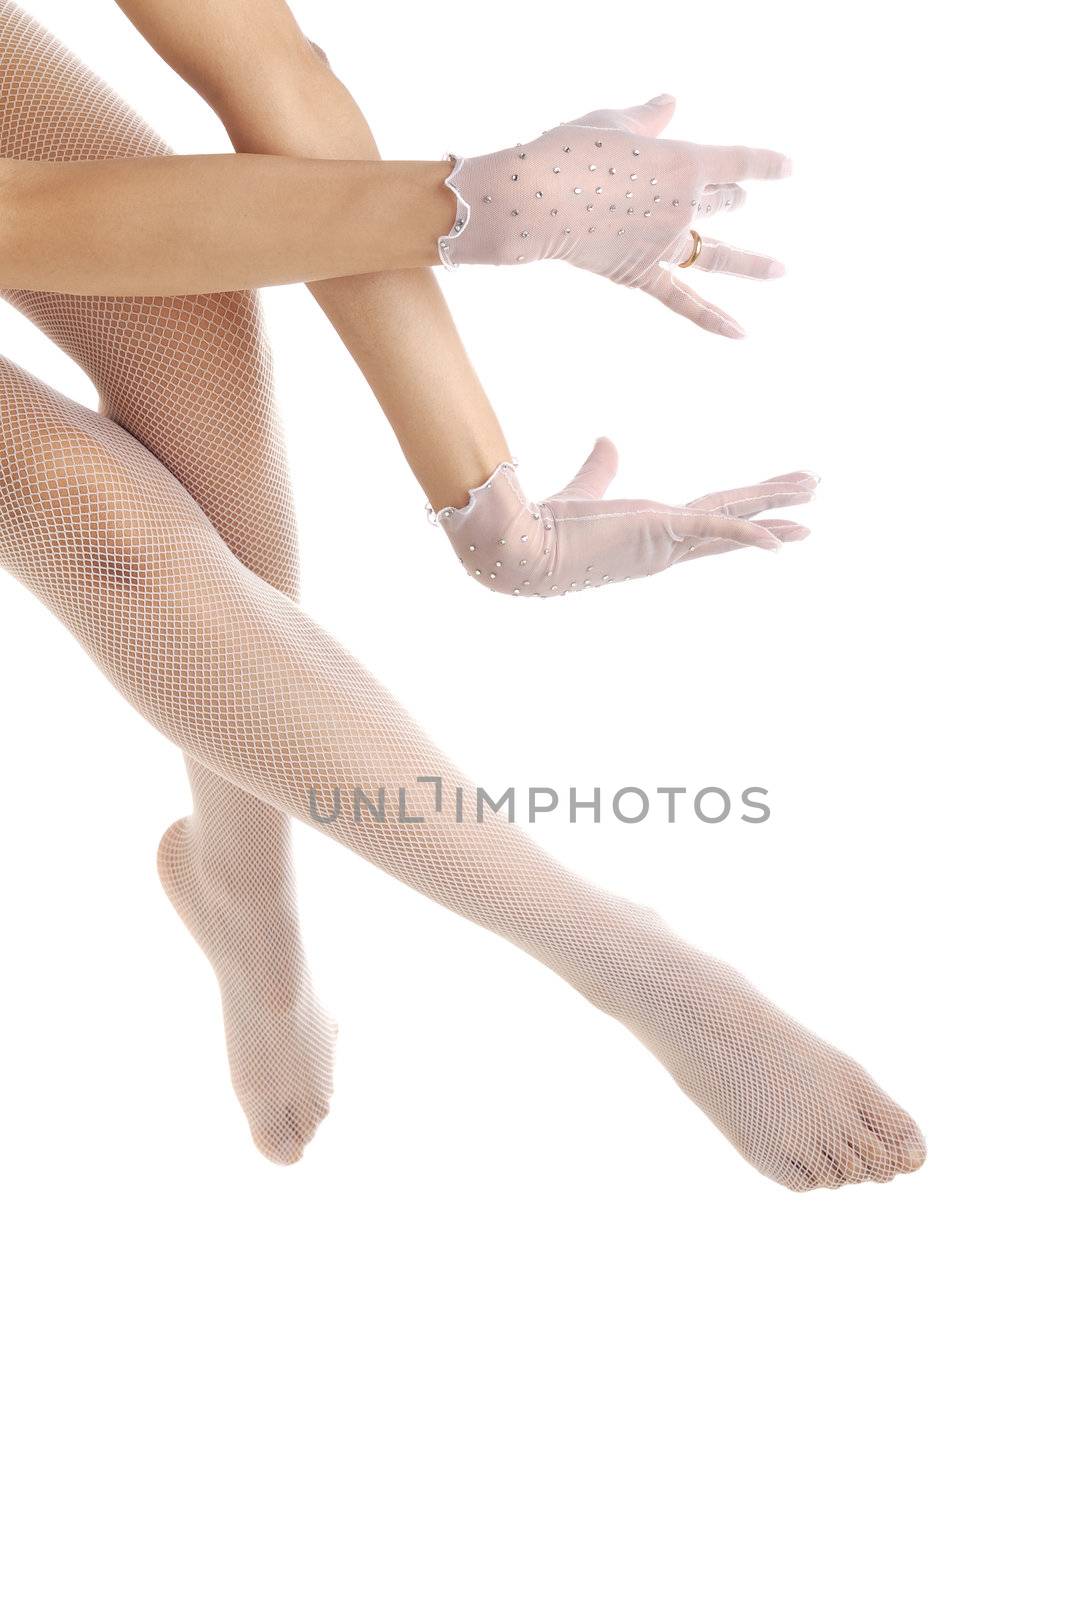 Elegant bridal legs and hands dancing ballet